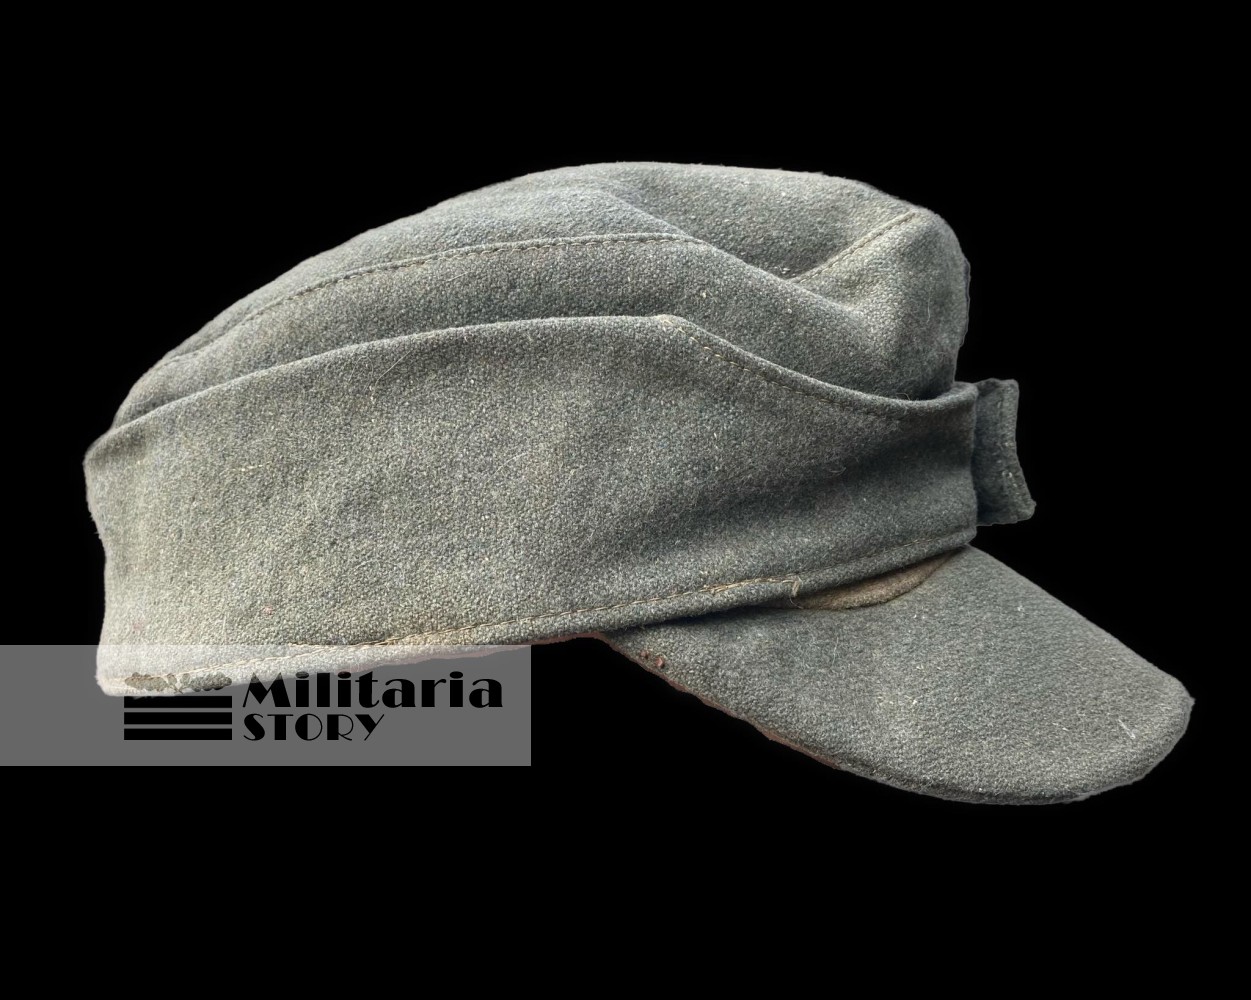 Killer Waffen SS M43 field cap - Killer Waffen SS M43 field cap: pre-war German Headgear